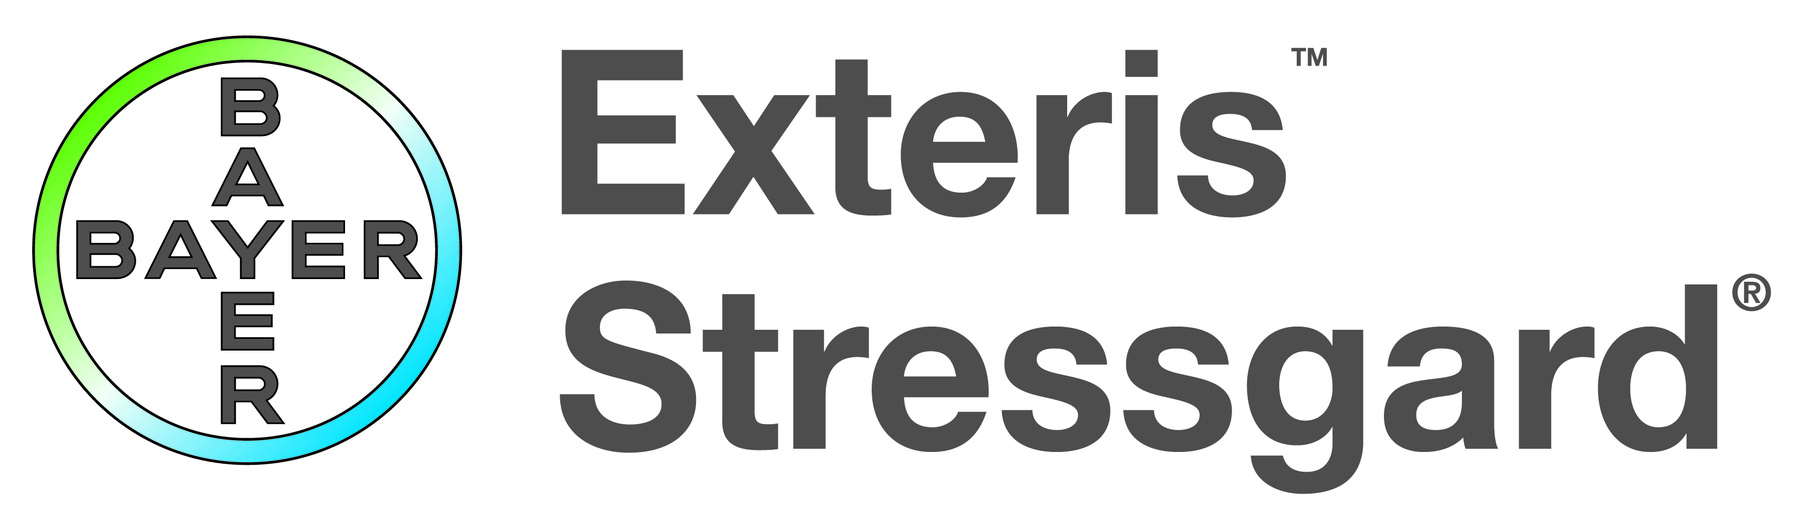 Bayer Exteris Stressgard Logo-APP